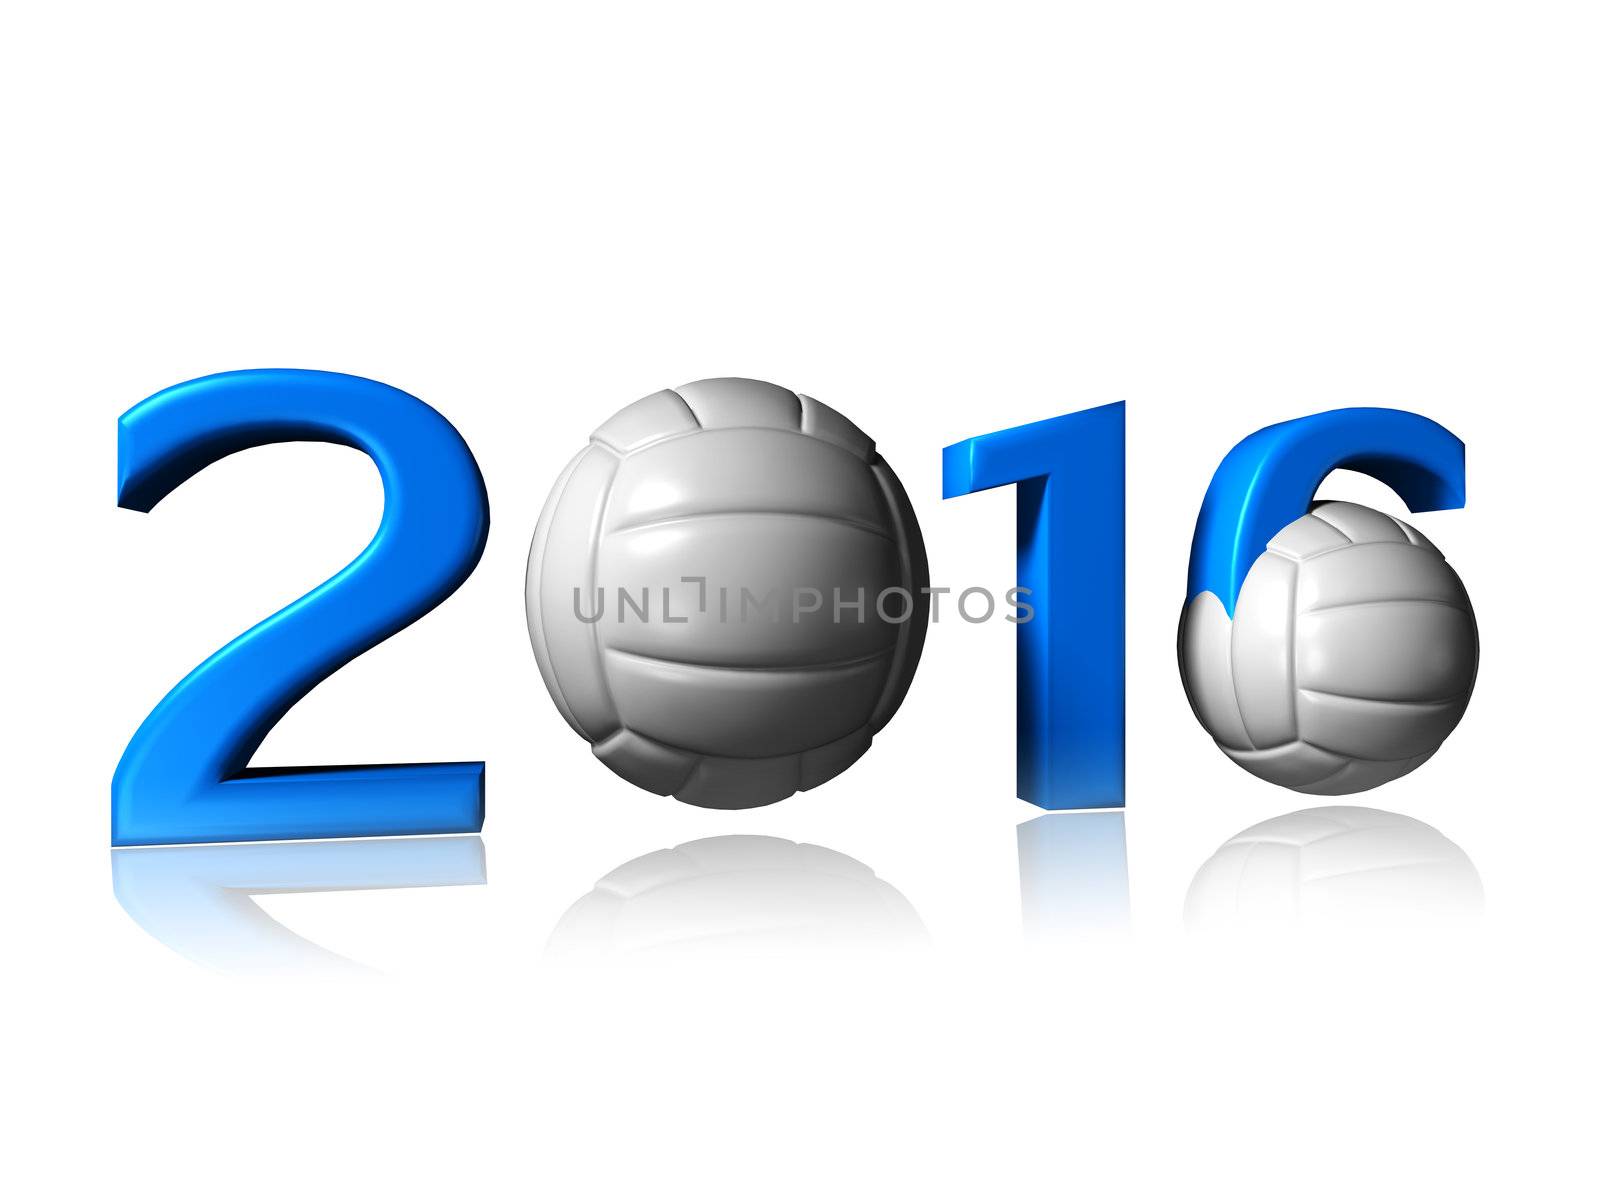 Big 2016 volleyball logo by shkyo30